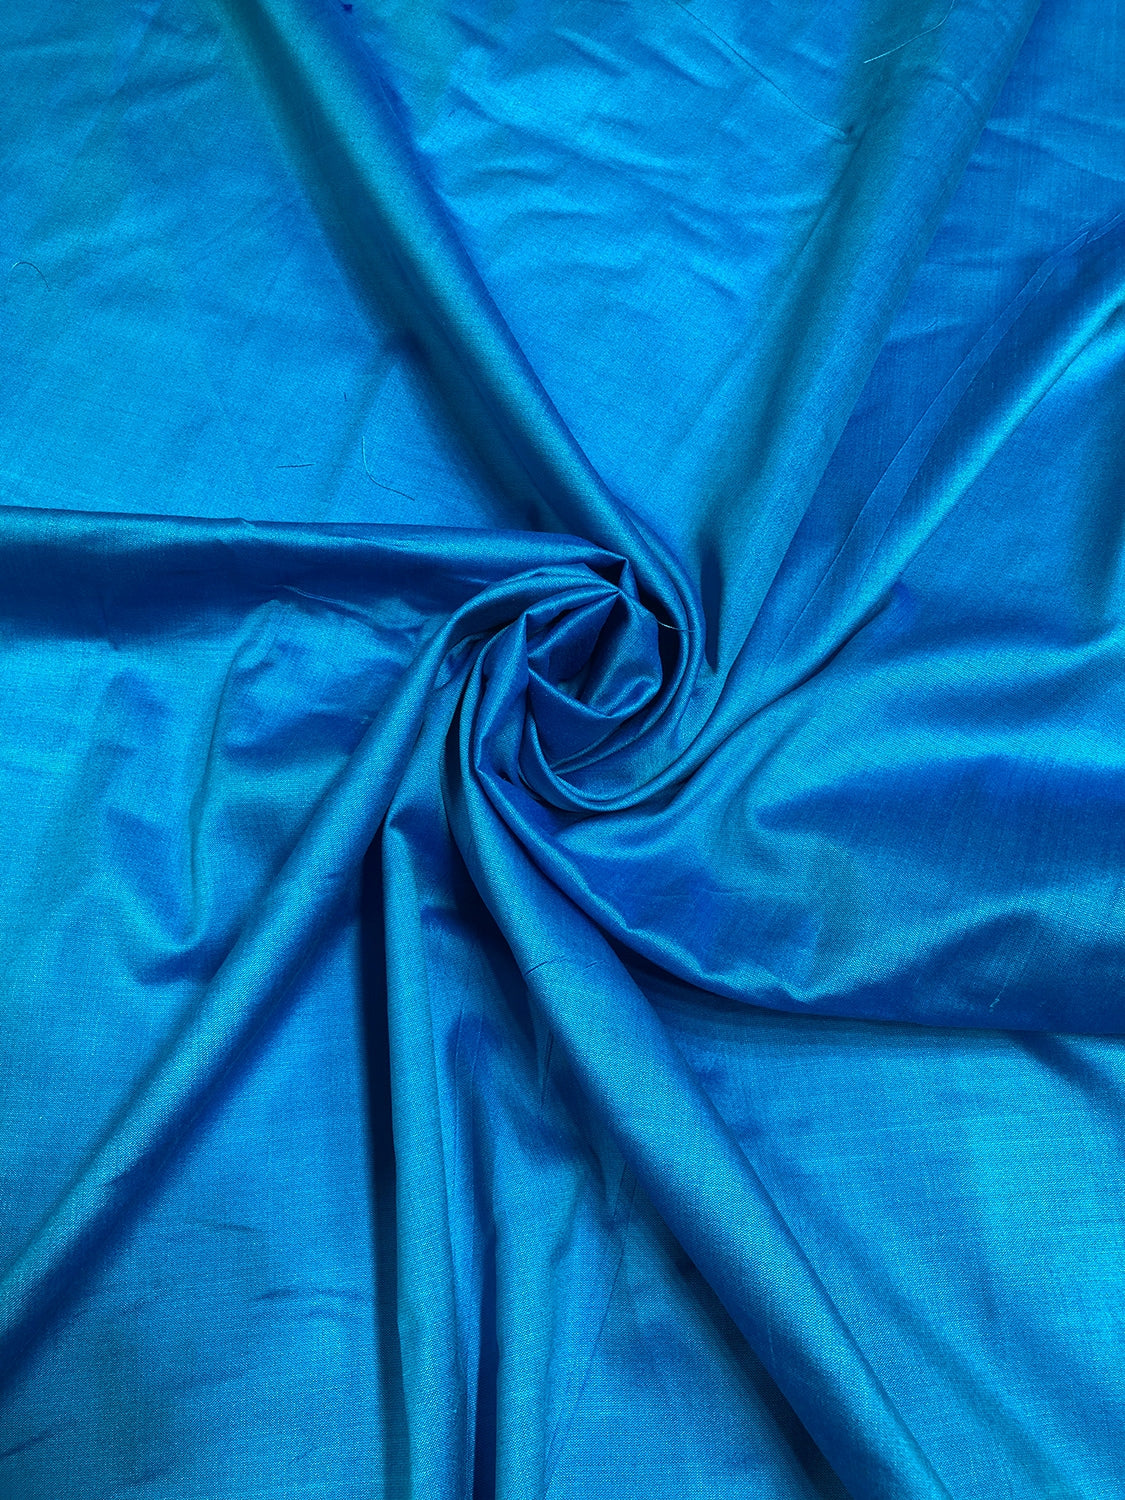 Vivid Blue Spun Silk Fabric